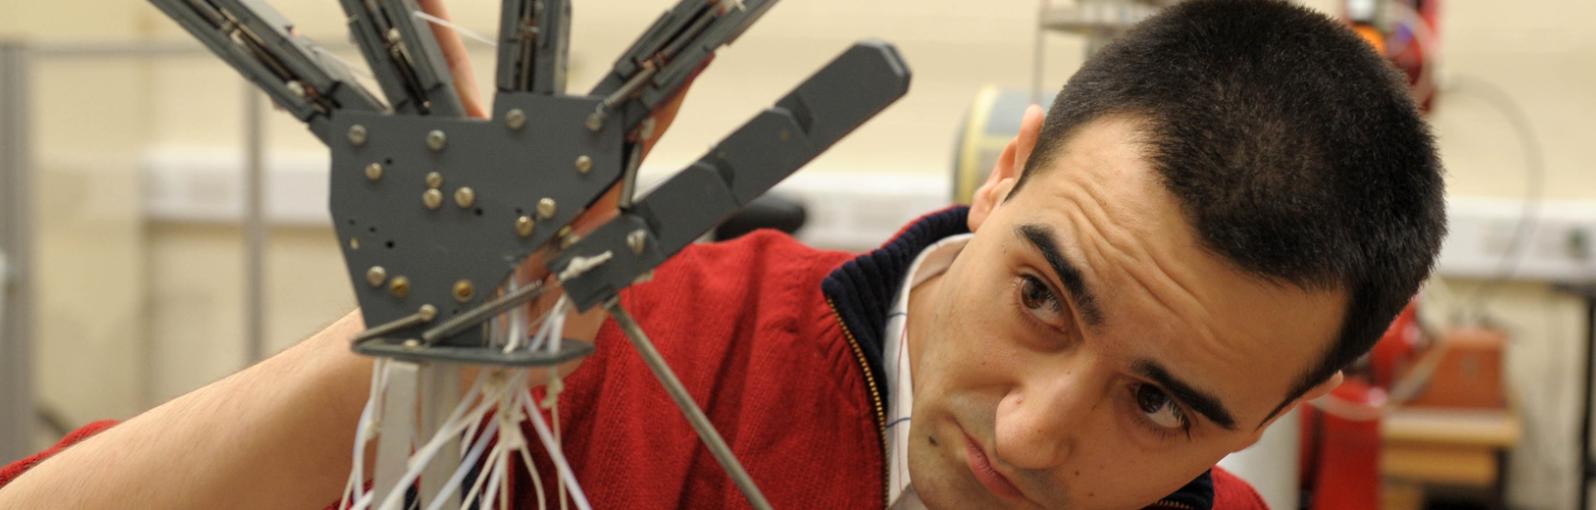 Student in robotics lab operating a robotic hand